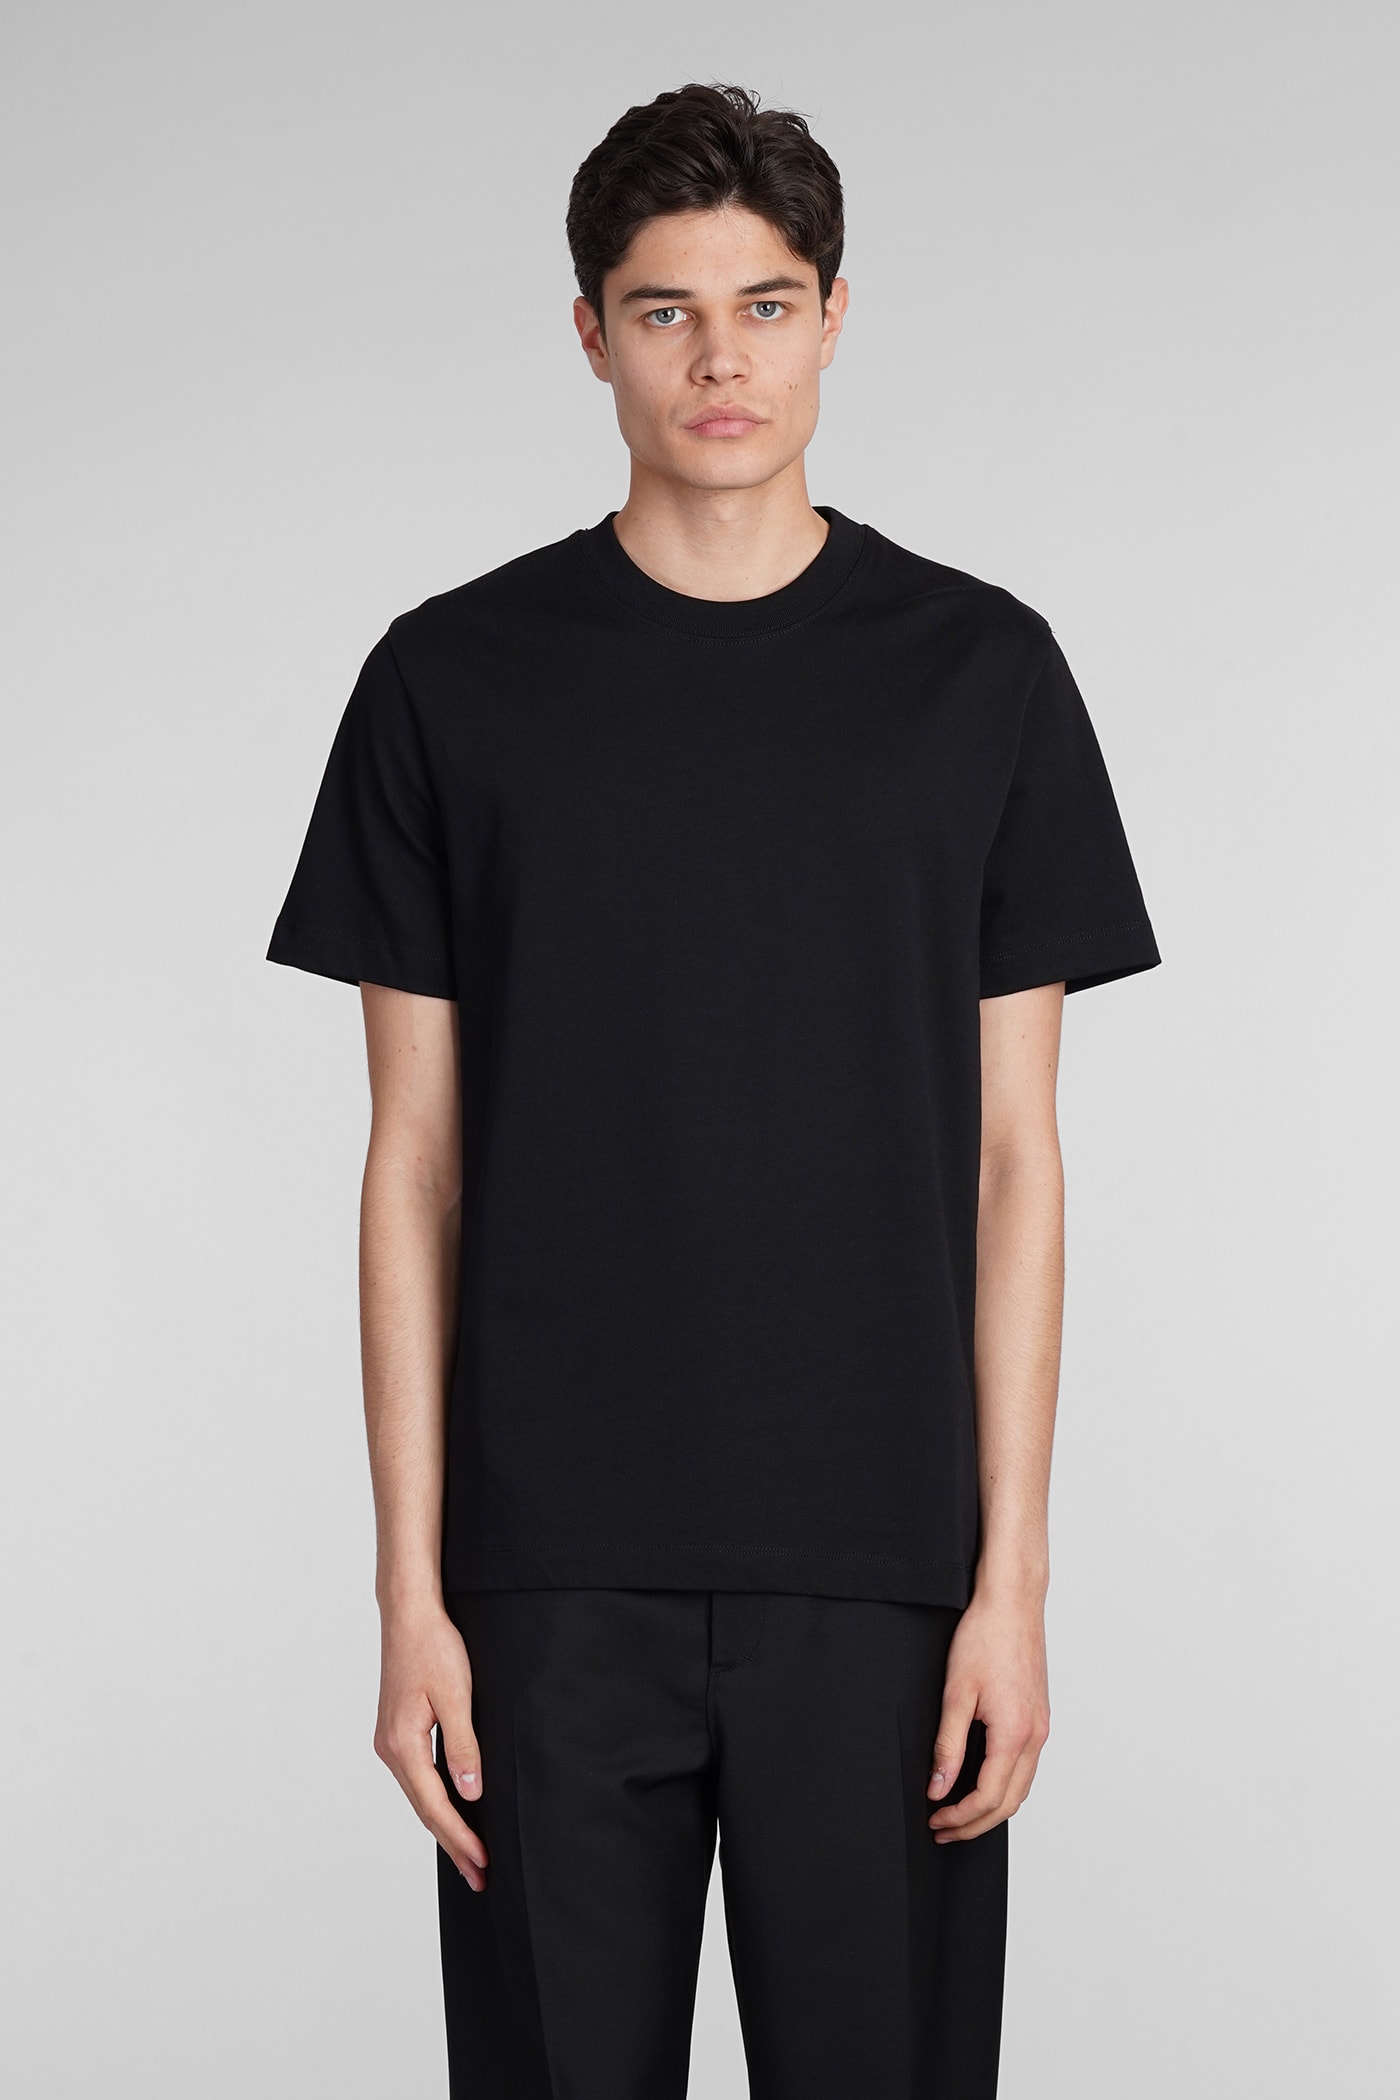 Helmut Lang T-shirt In Black Cotton In Metallic